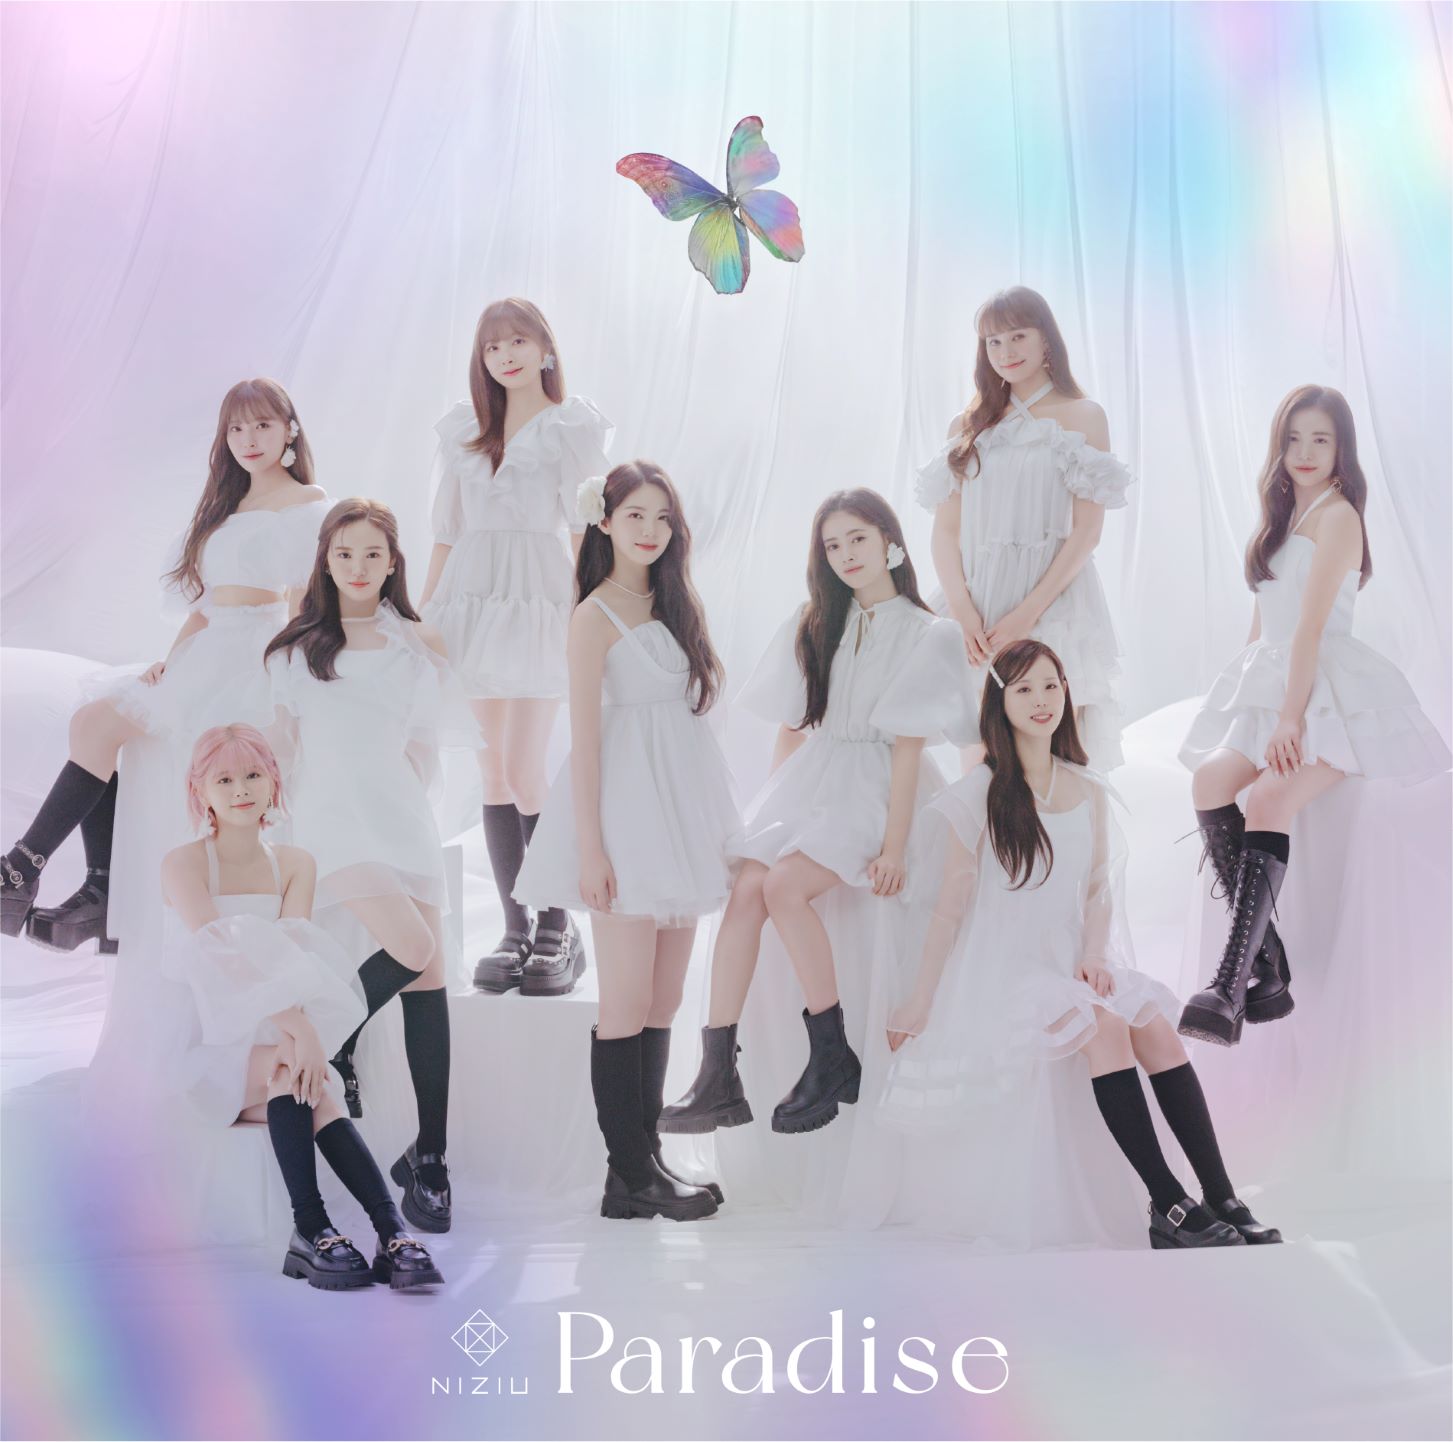 『Paradise』 初回生産限定盤Aジャケット